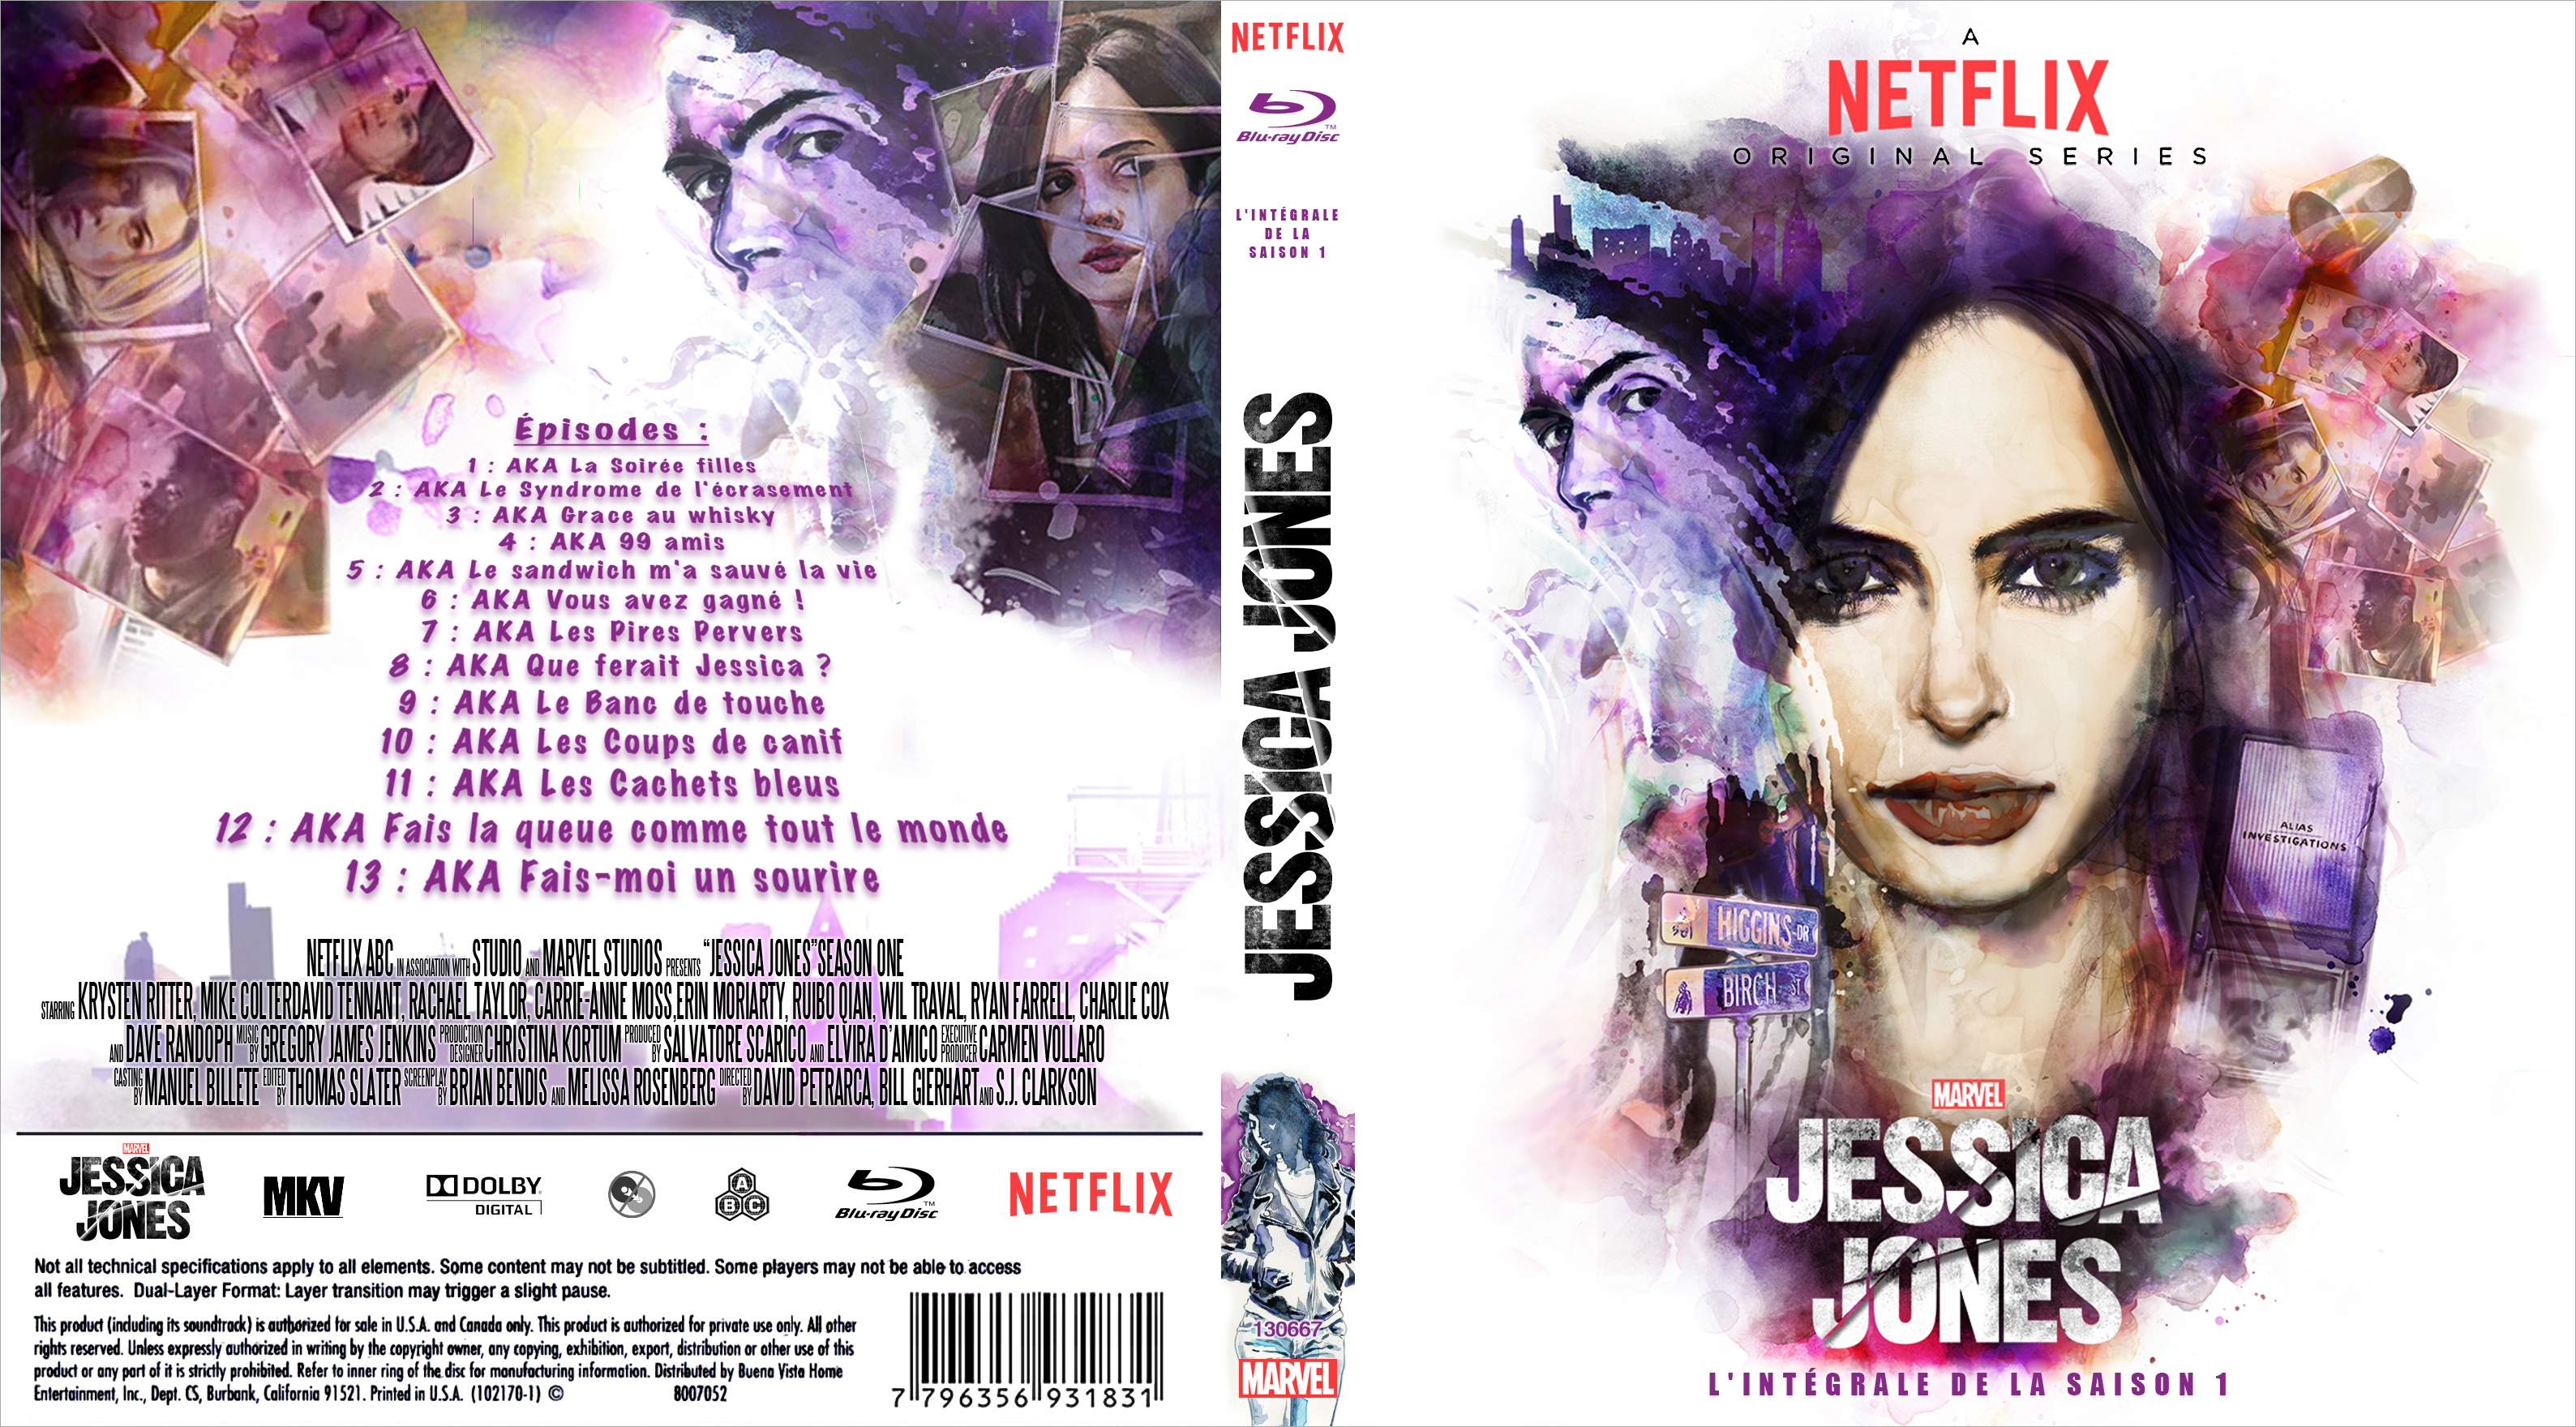 Jaquette DVD Jessica Jones saison 1 custom (BLU-RAY)